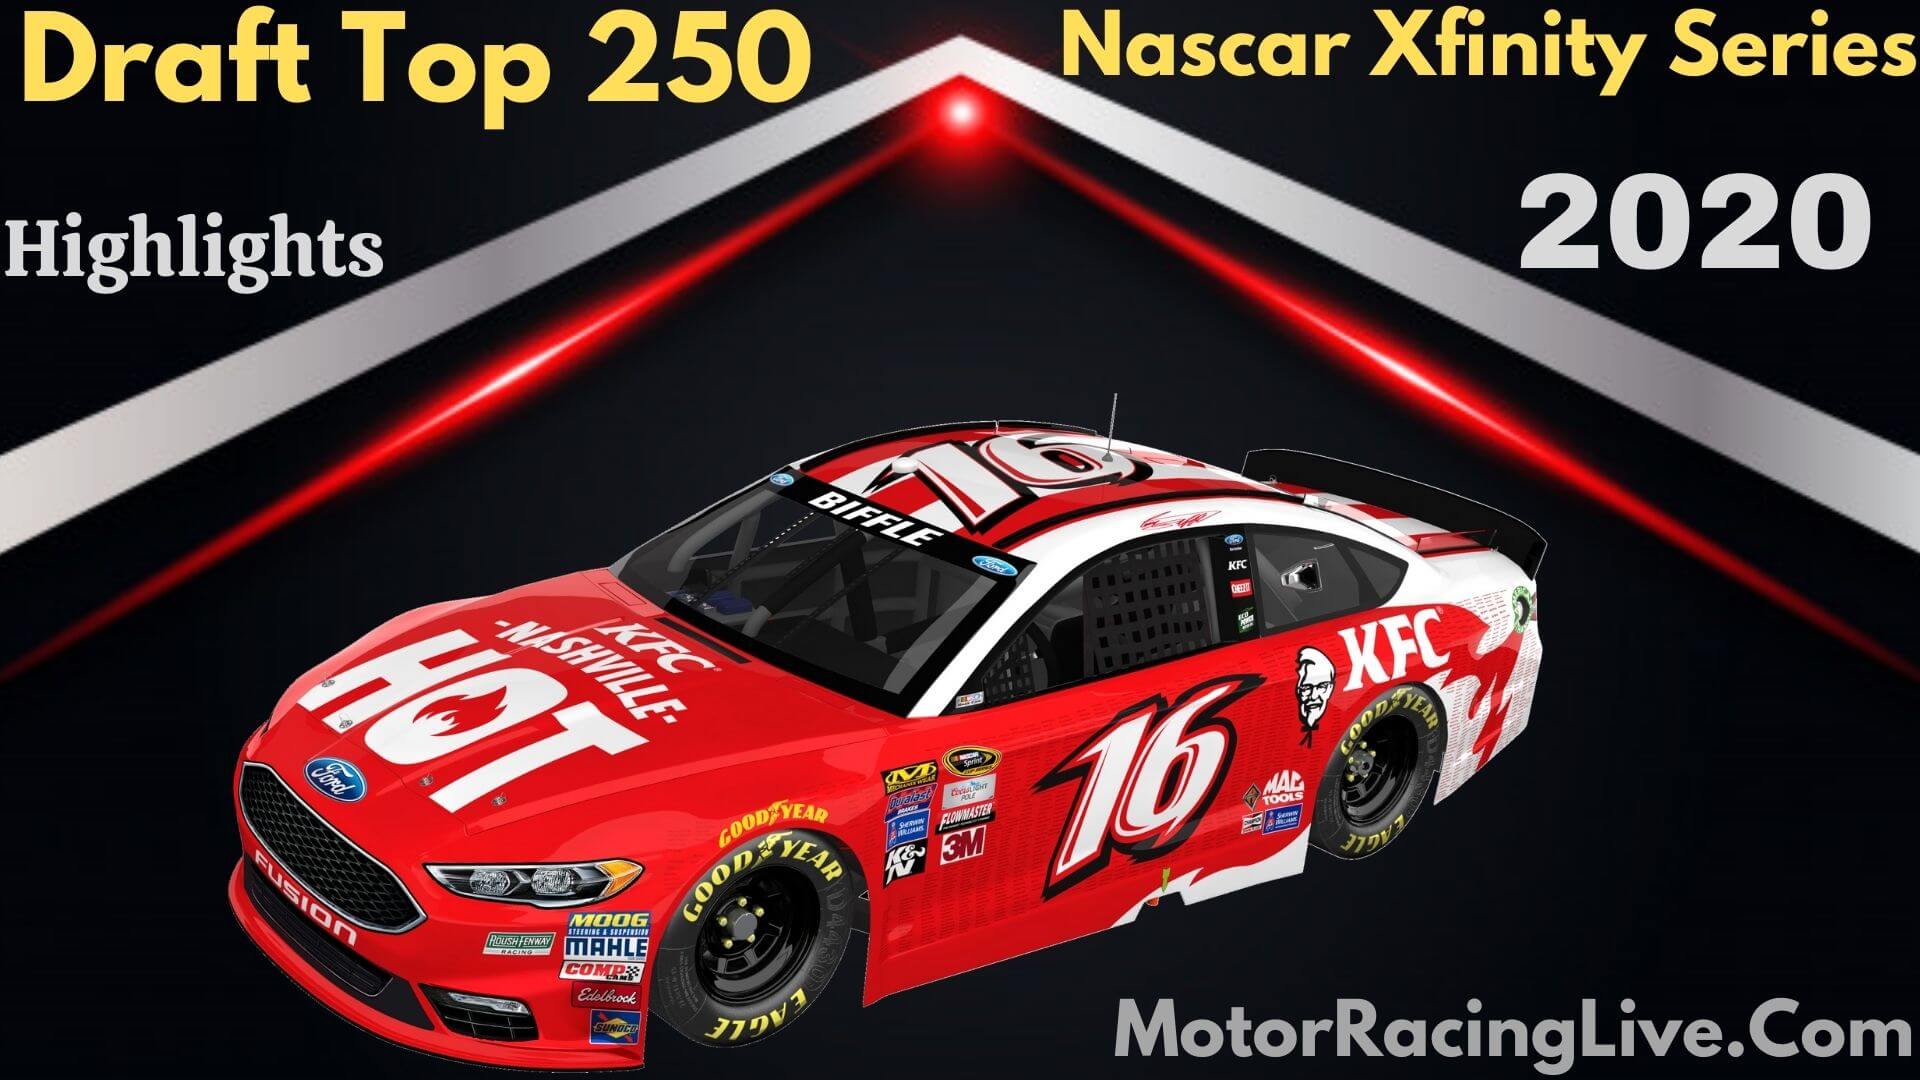 Draft Top 250 Highlights Nascar Xfinity Series 2020